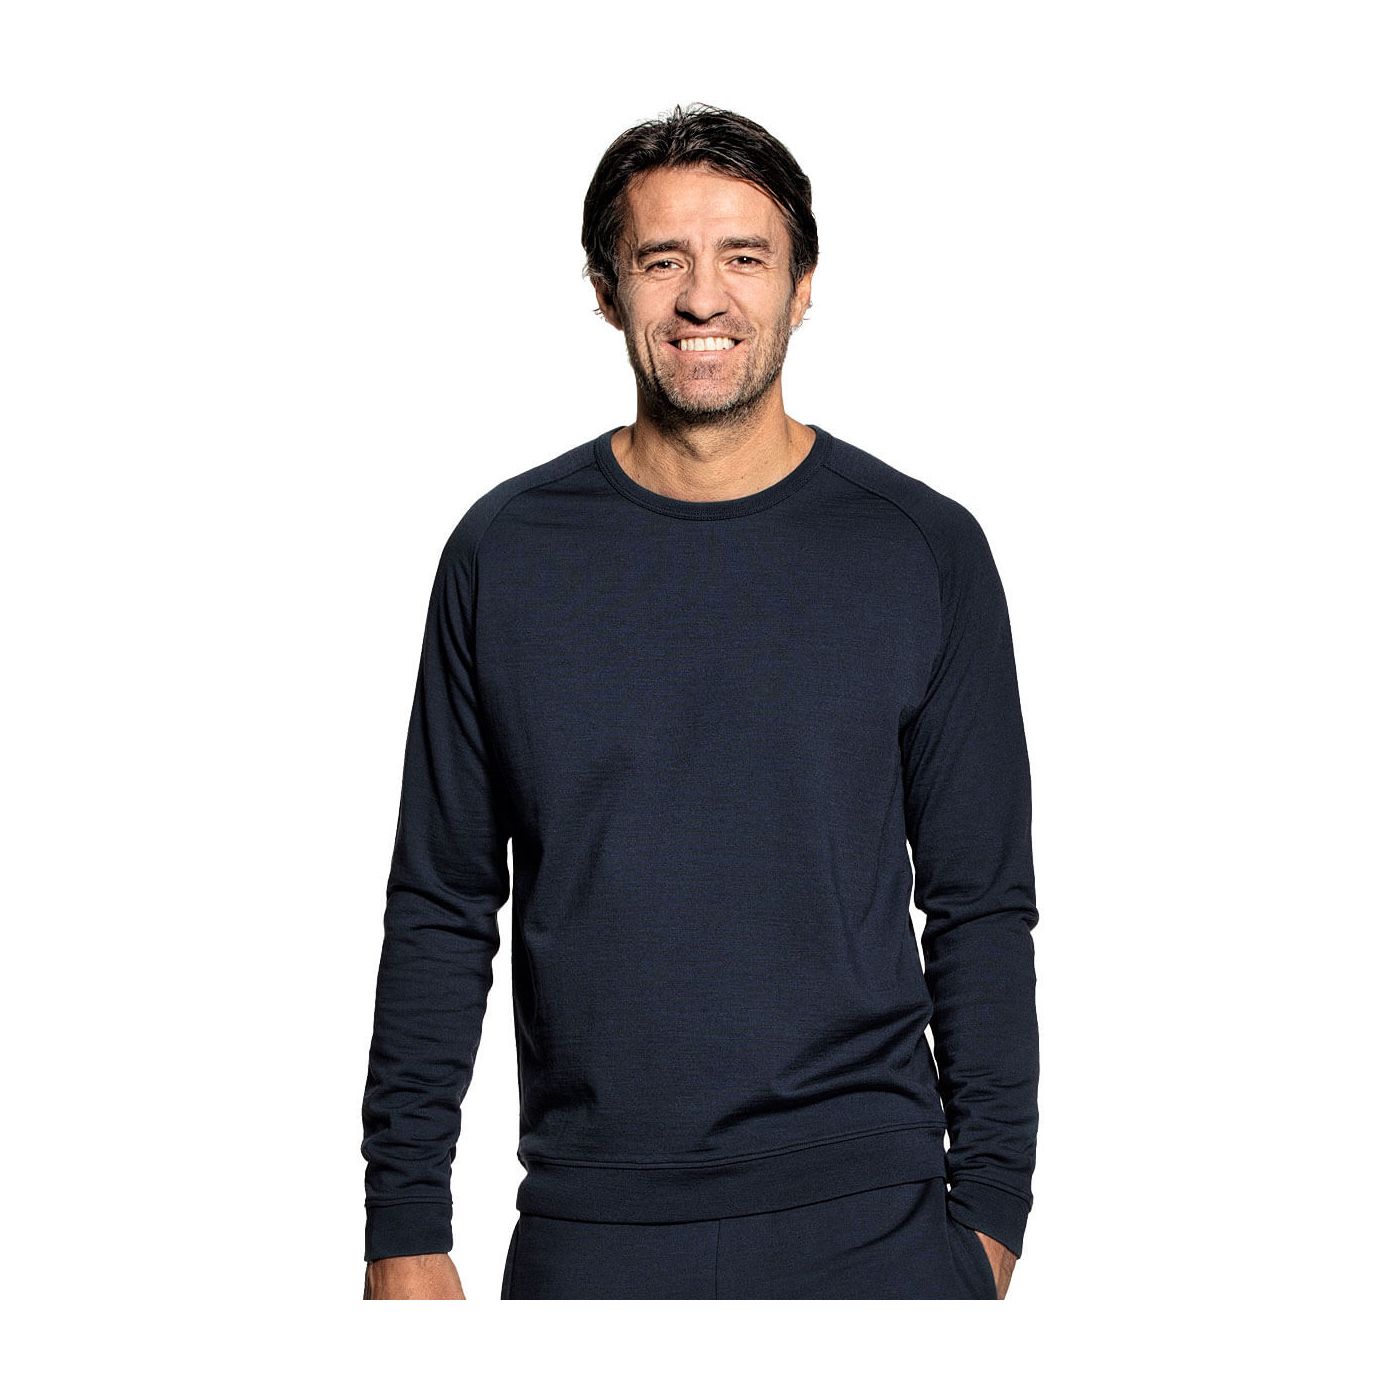 Sweatshirt for men made of Merino wool in Dark blue